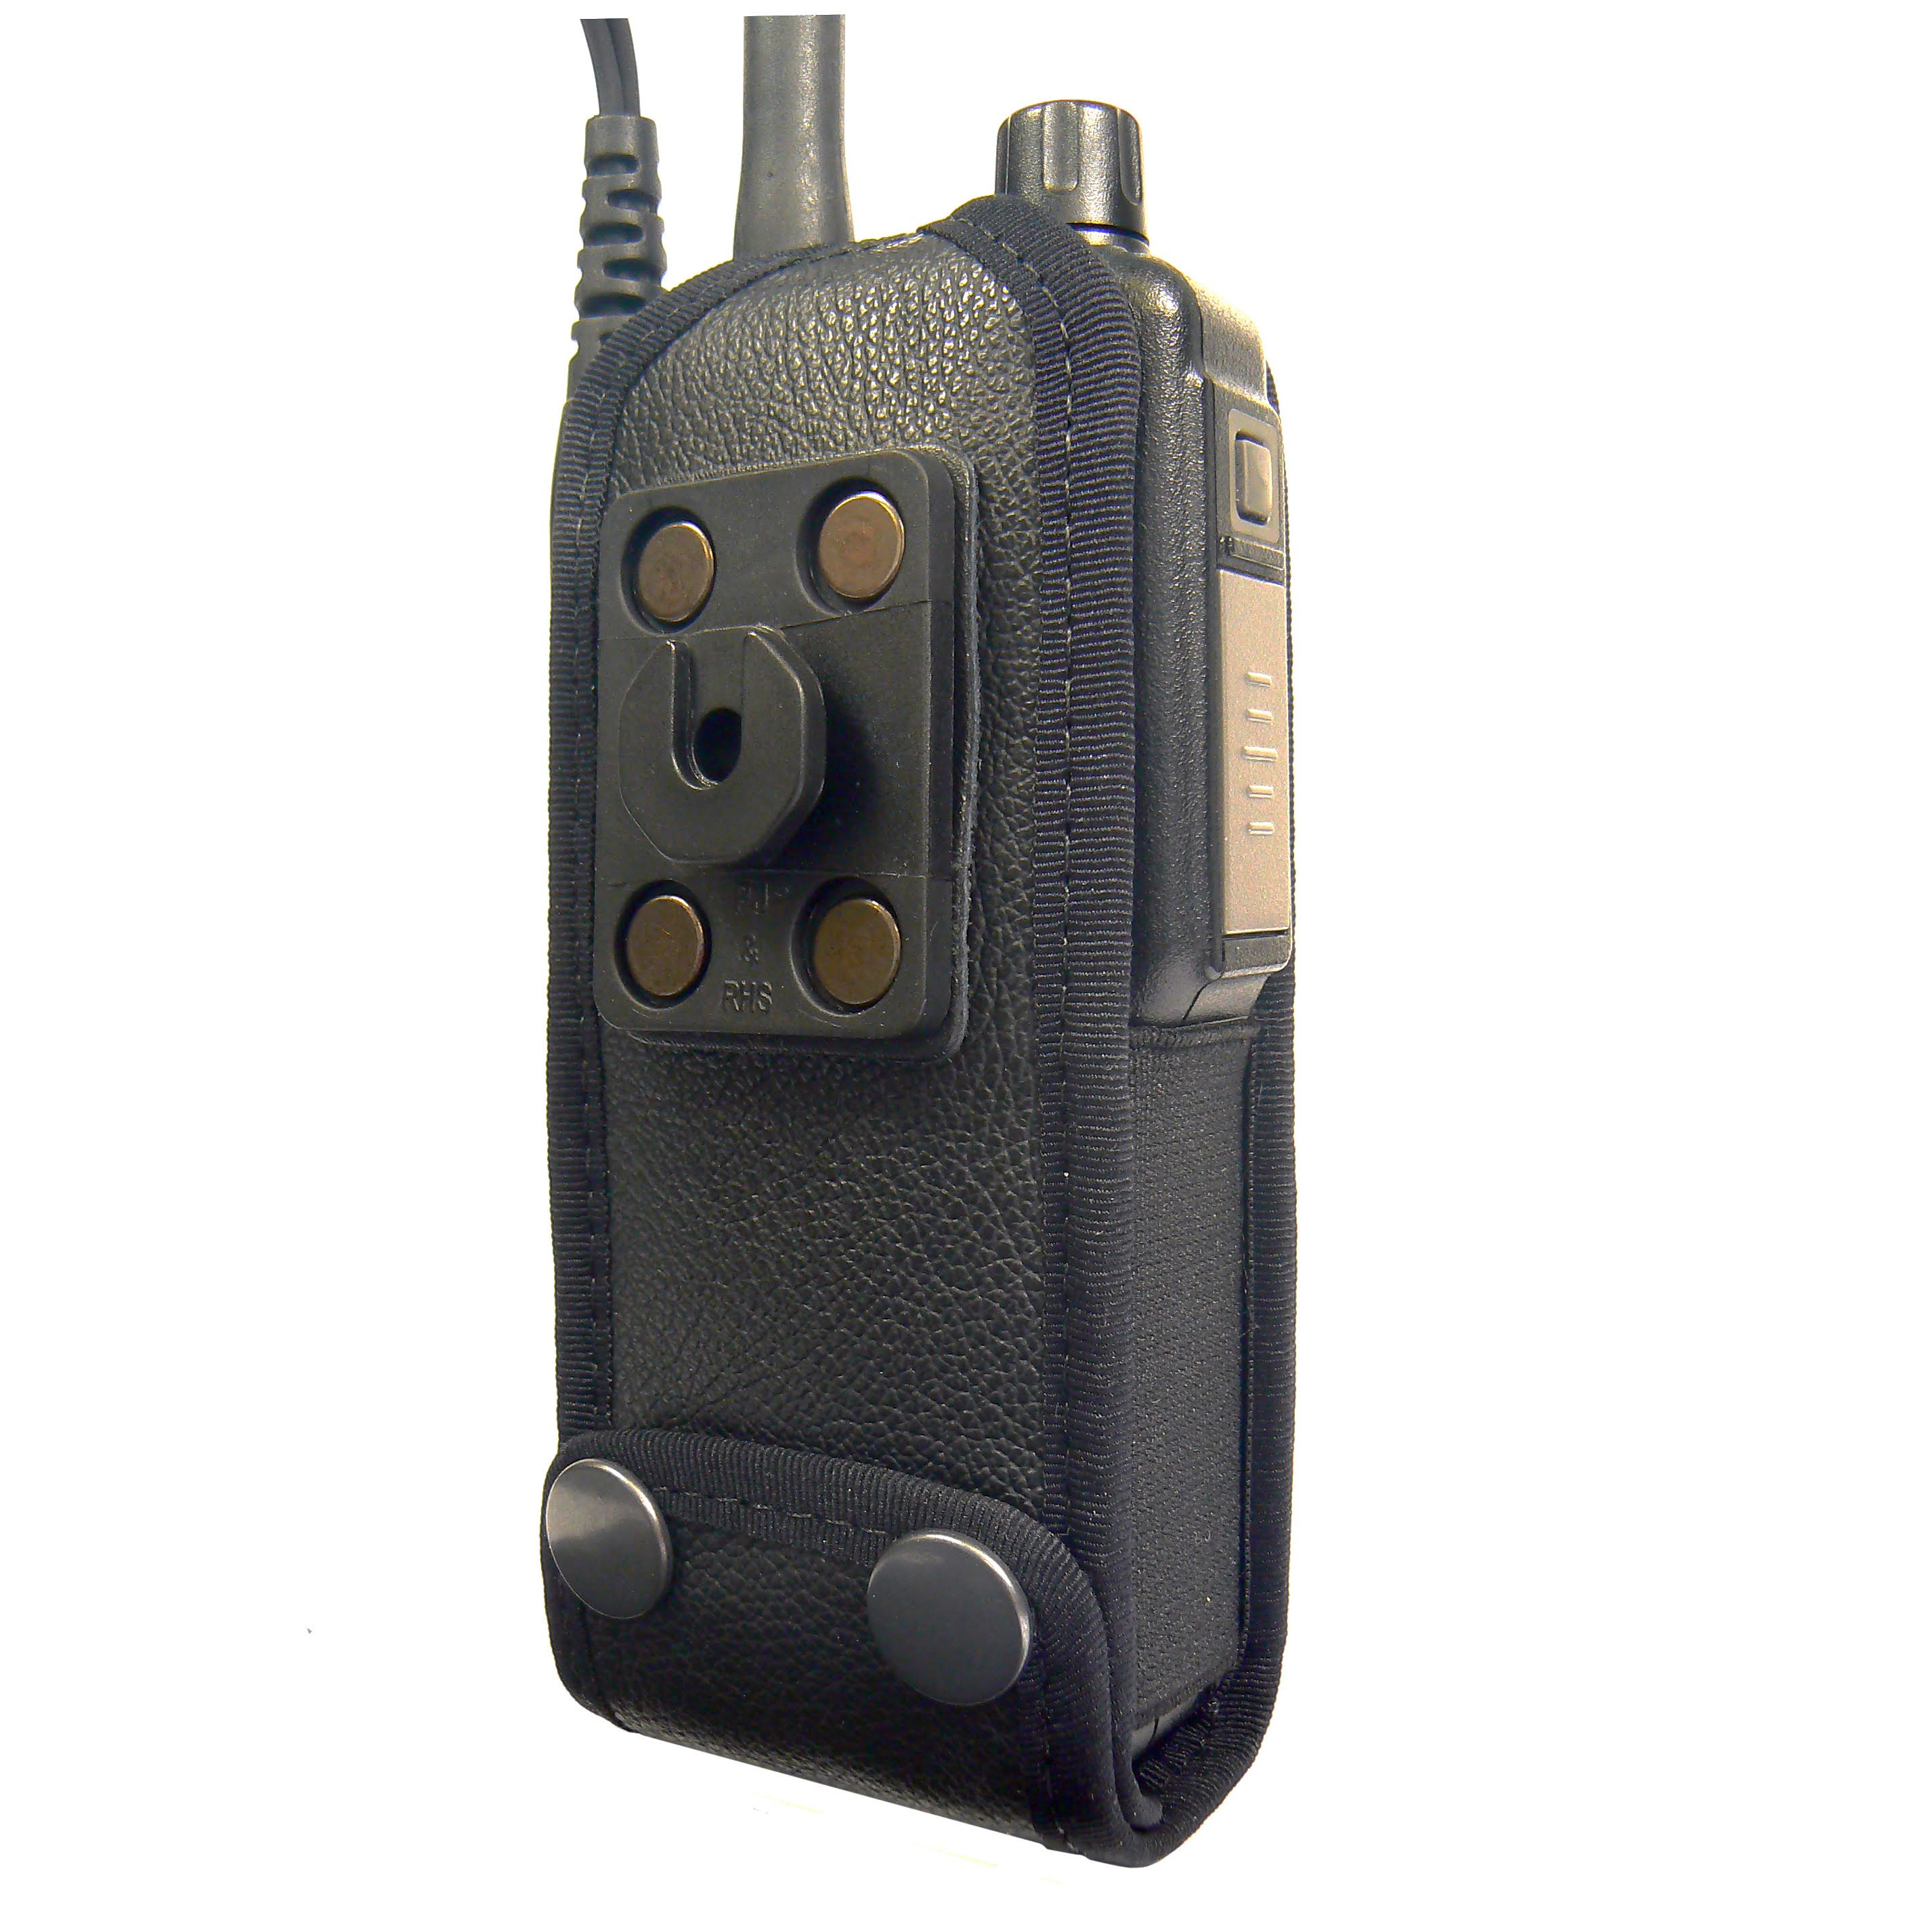 Sepura STP8000 Tetra leather radio case with Click-On